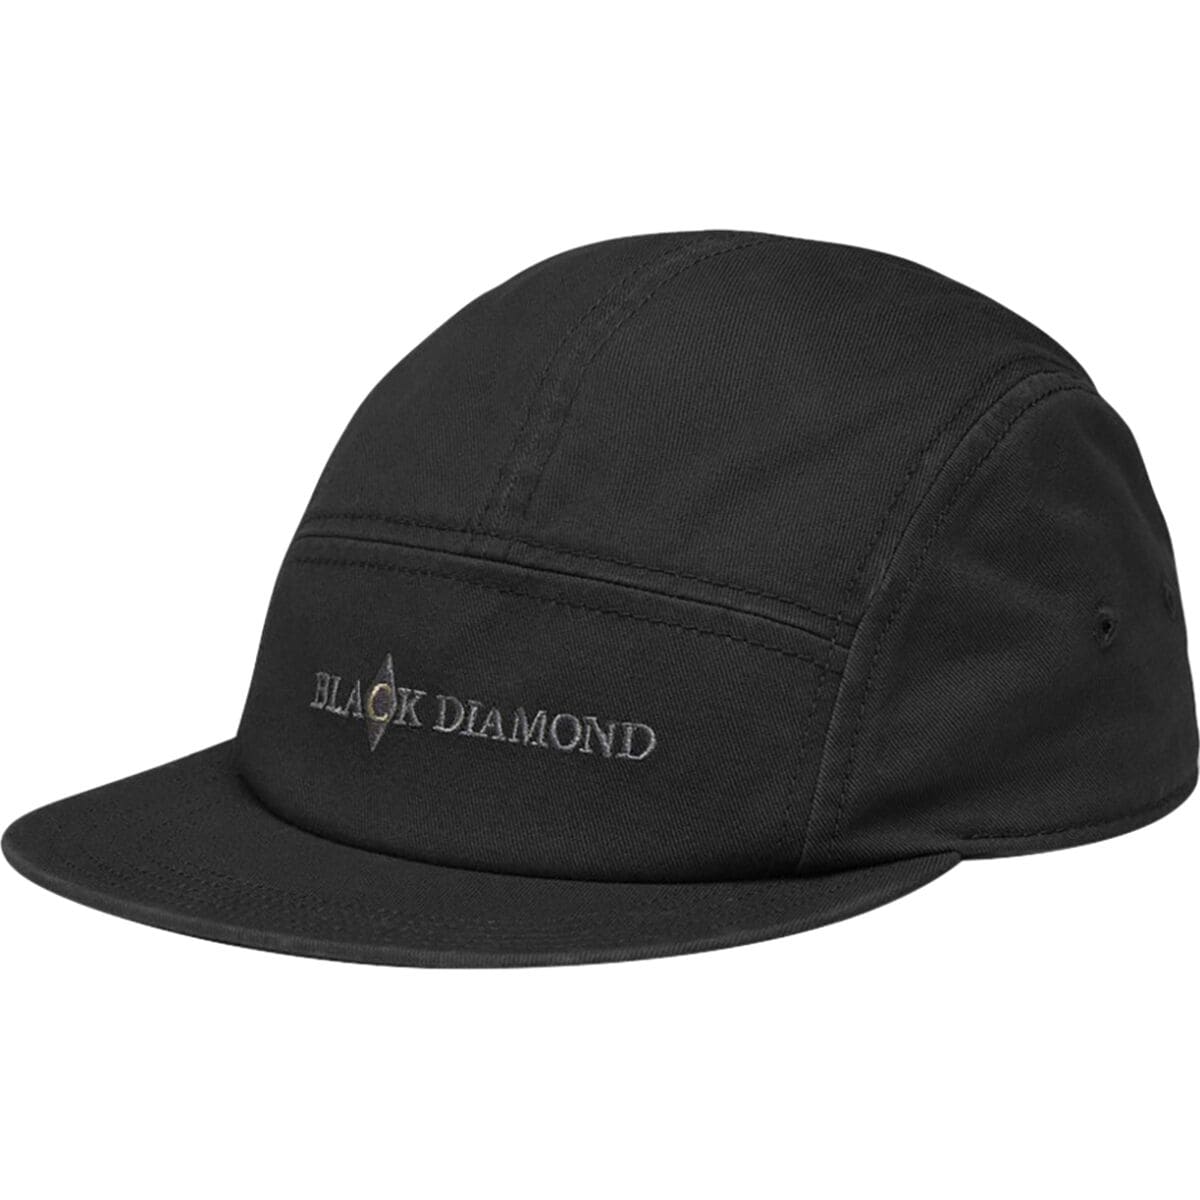 Кэмпер кепка Black Diamond, цвет black/steel grey цена и фото